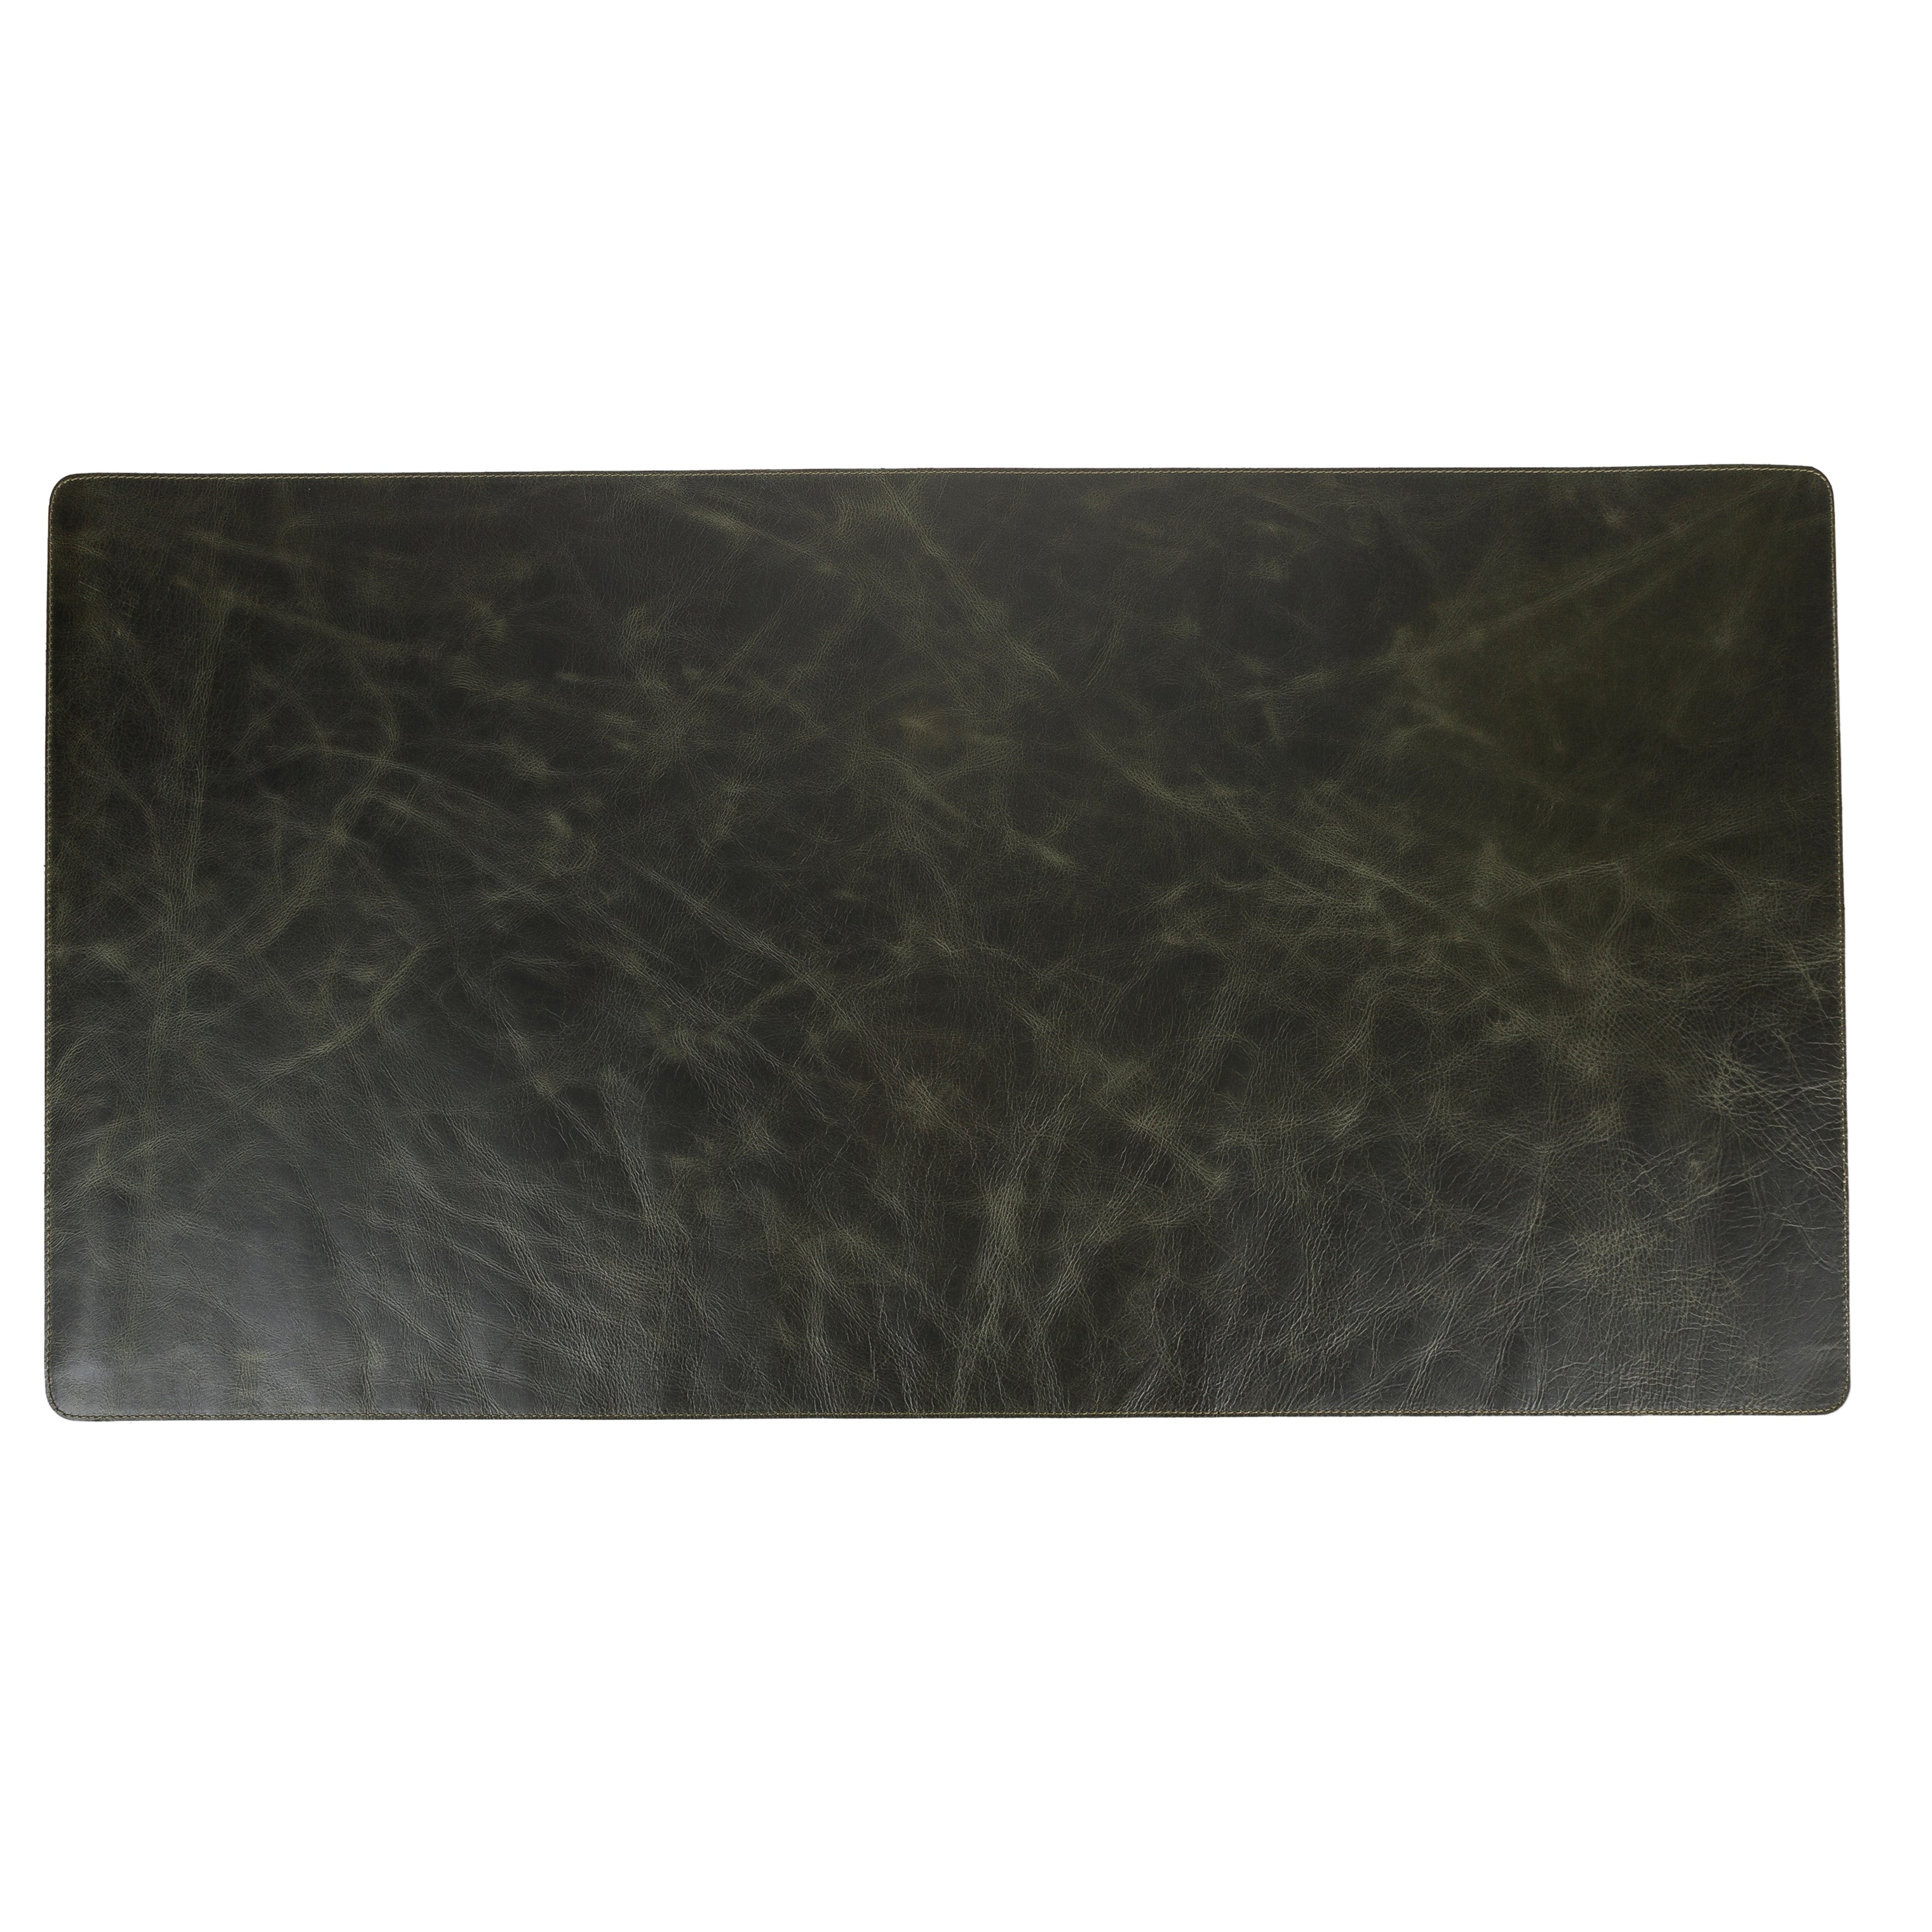 DelfiCase Genuine Dark Green Leather Deskmat, Computer Pad, Office Desk Pad 4